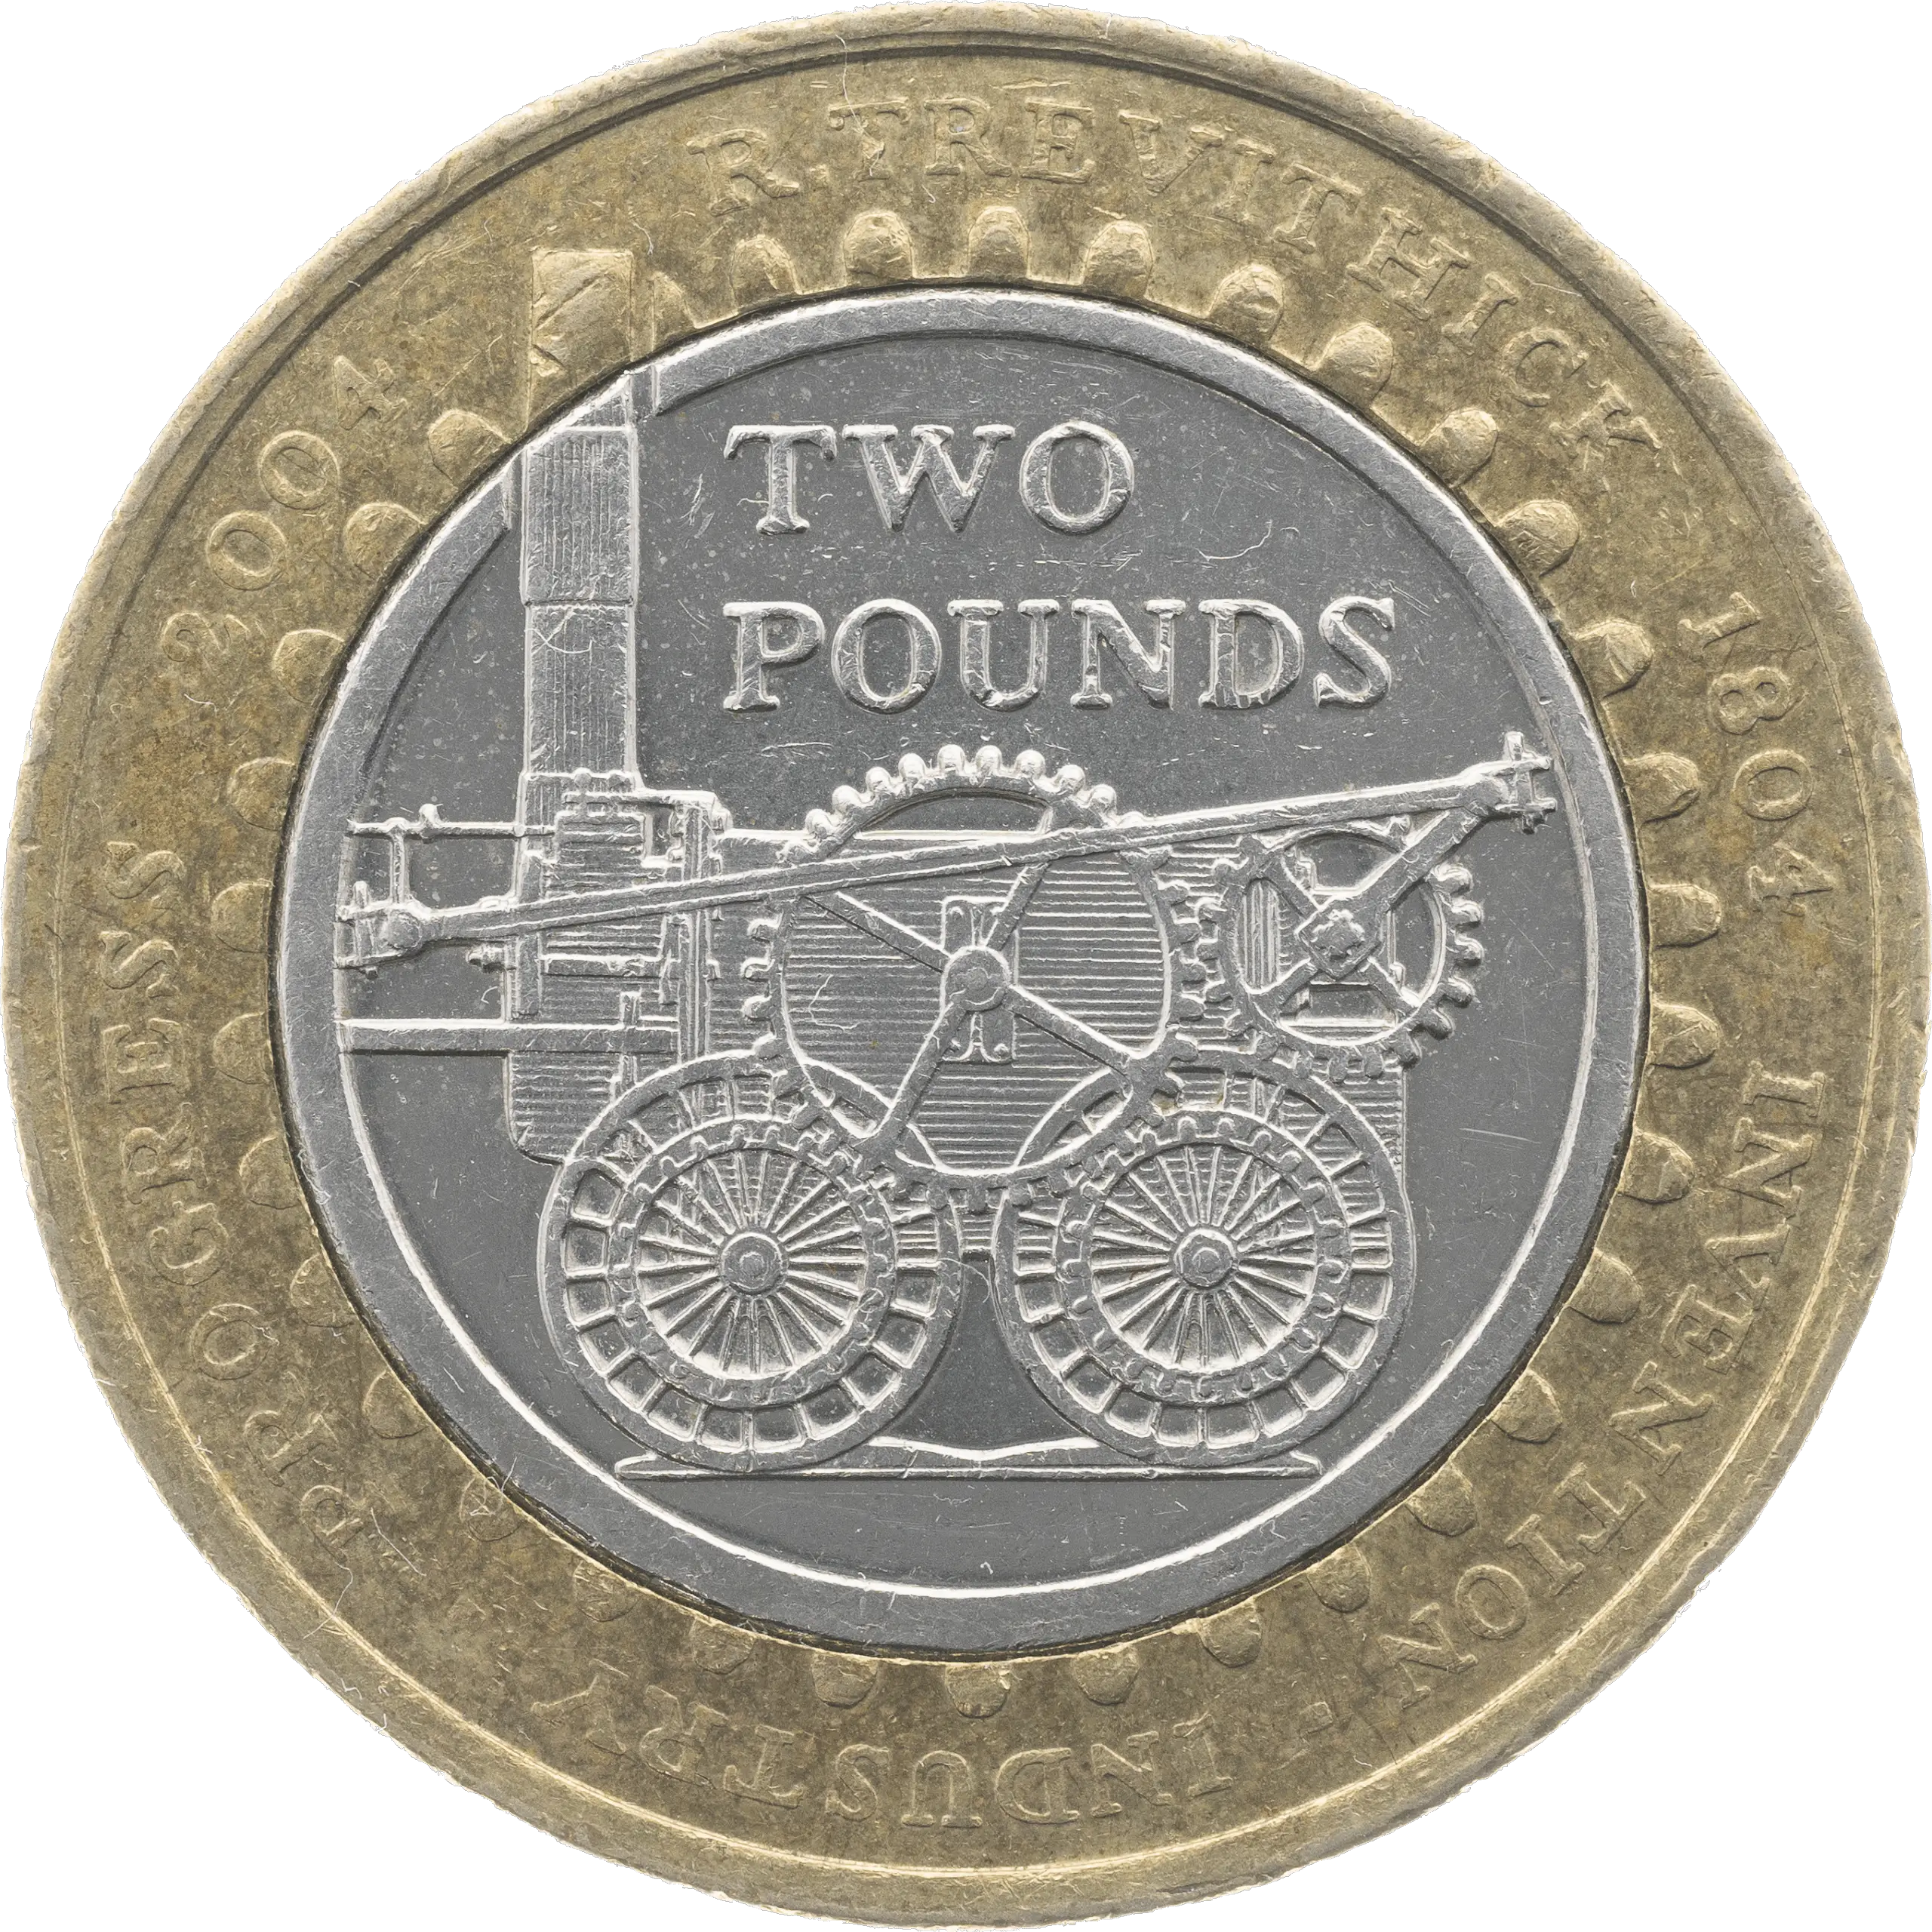 Trevithick £2 Coin Design